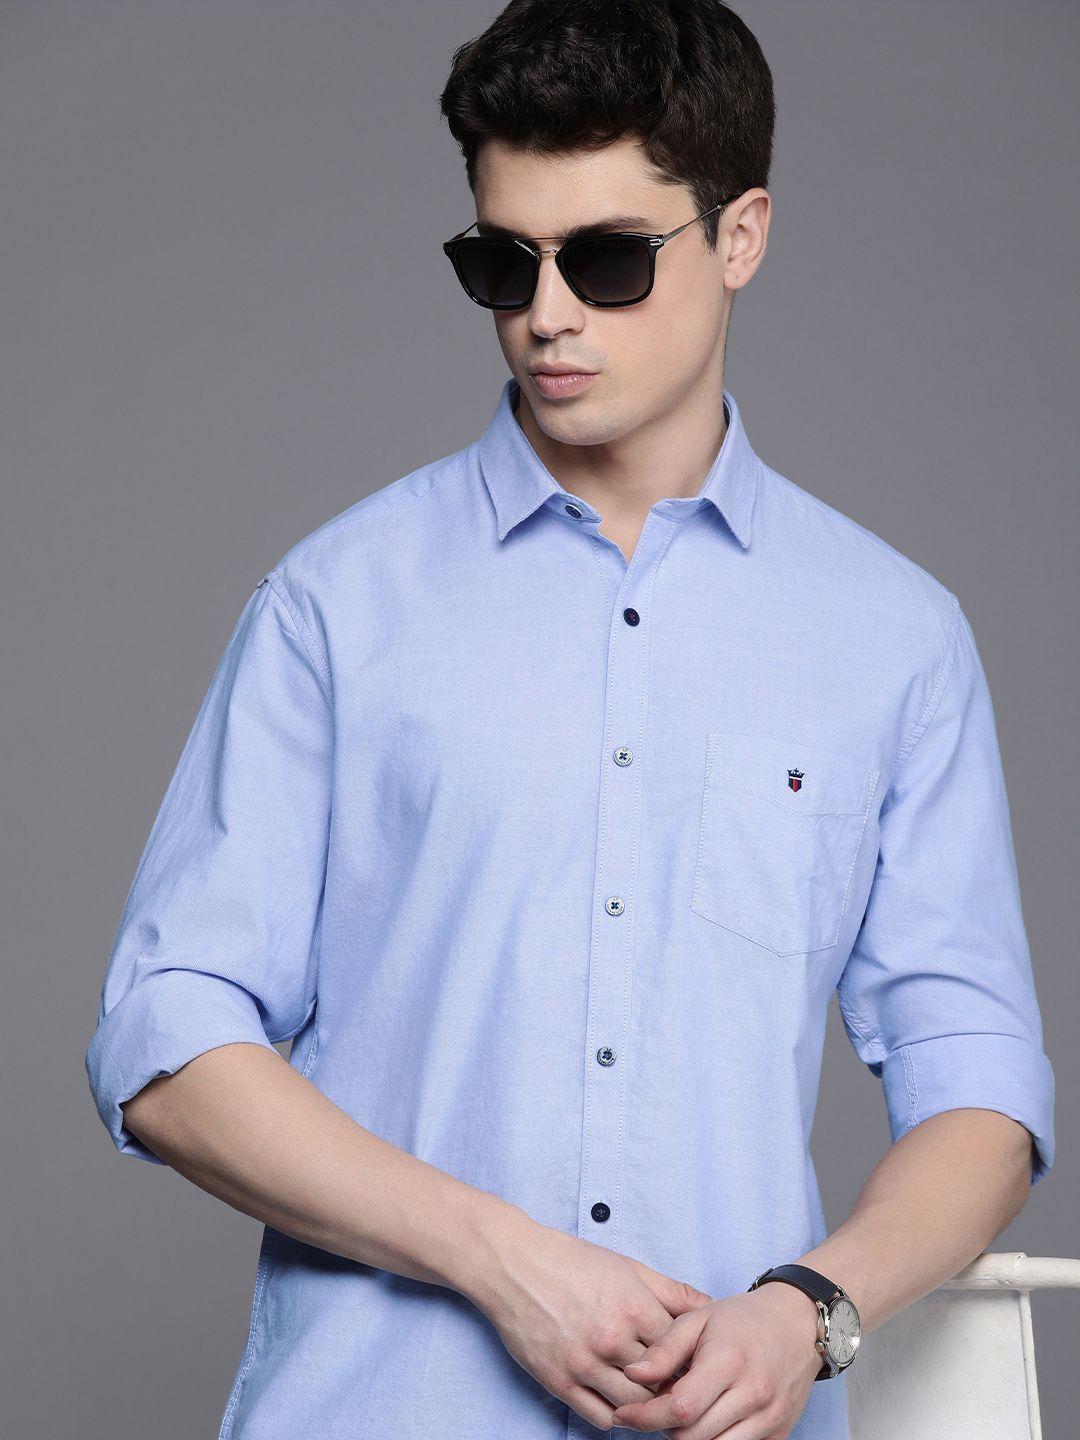 louis philippe sport pure cotton slim fit casual shirt